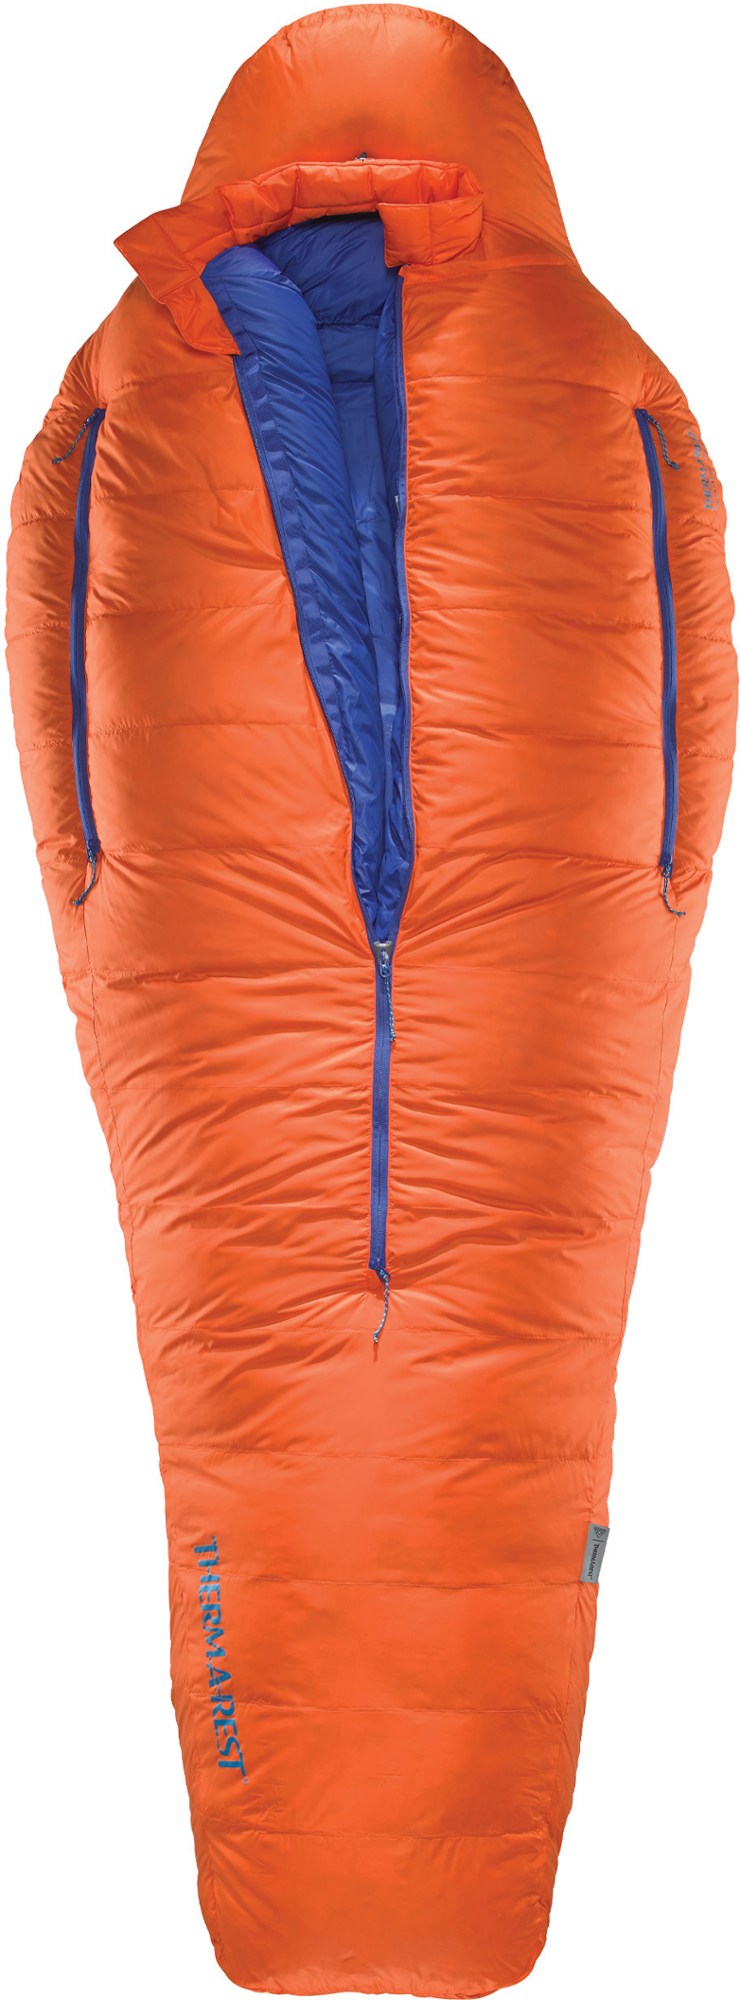 цена Спальный мешок Polar Ranger -20 Therm-a-Rest, оранжевый